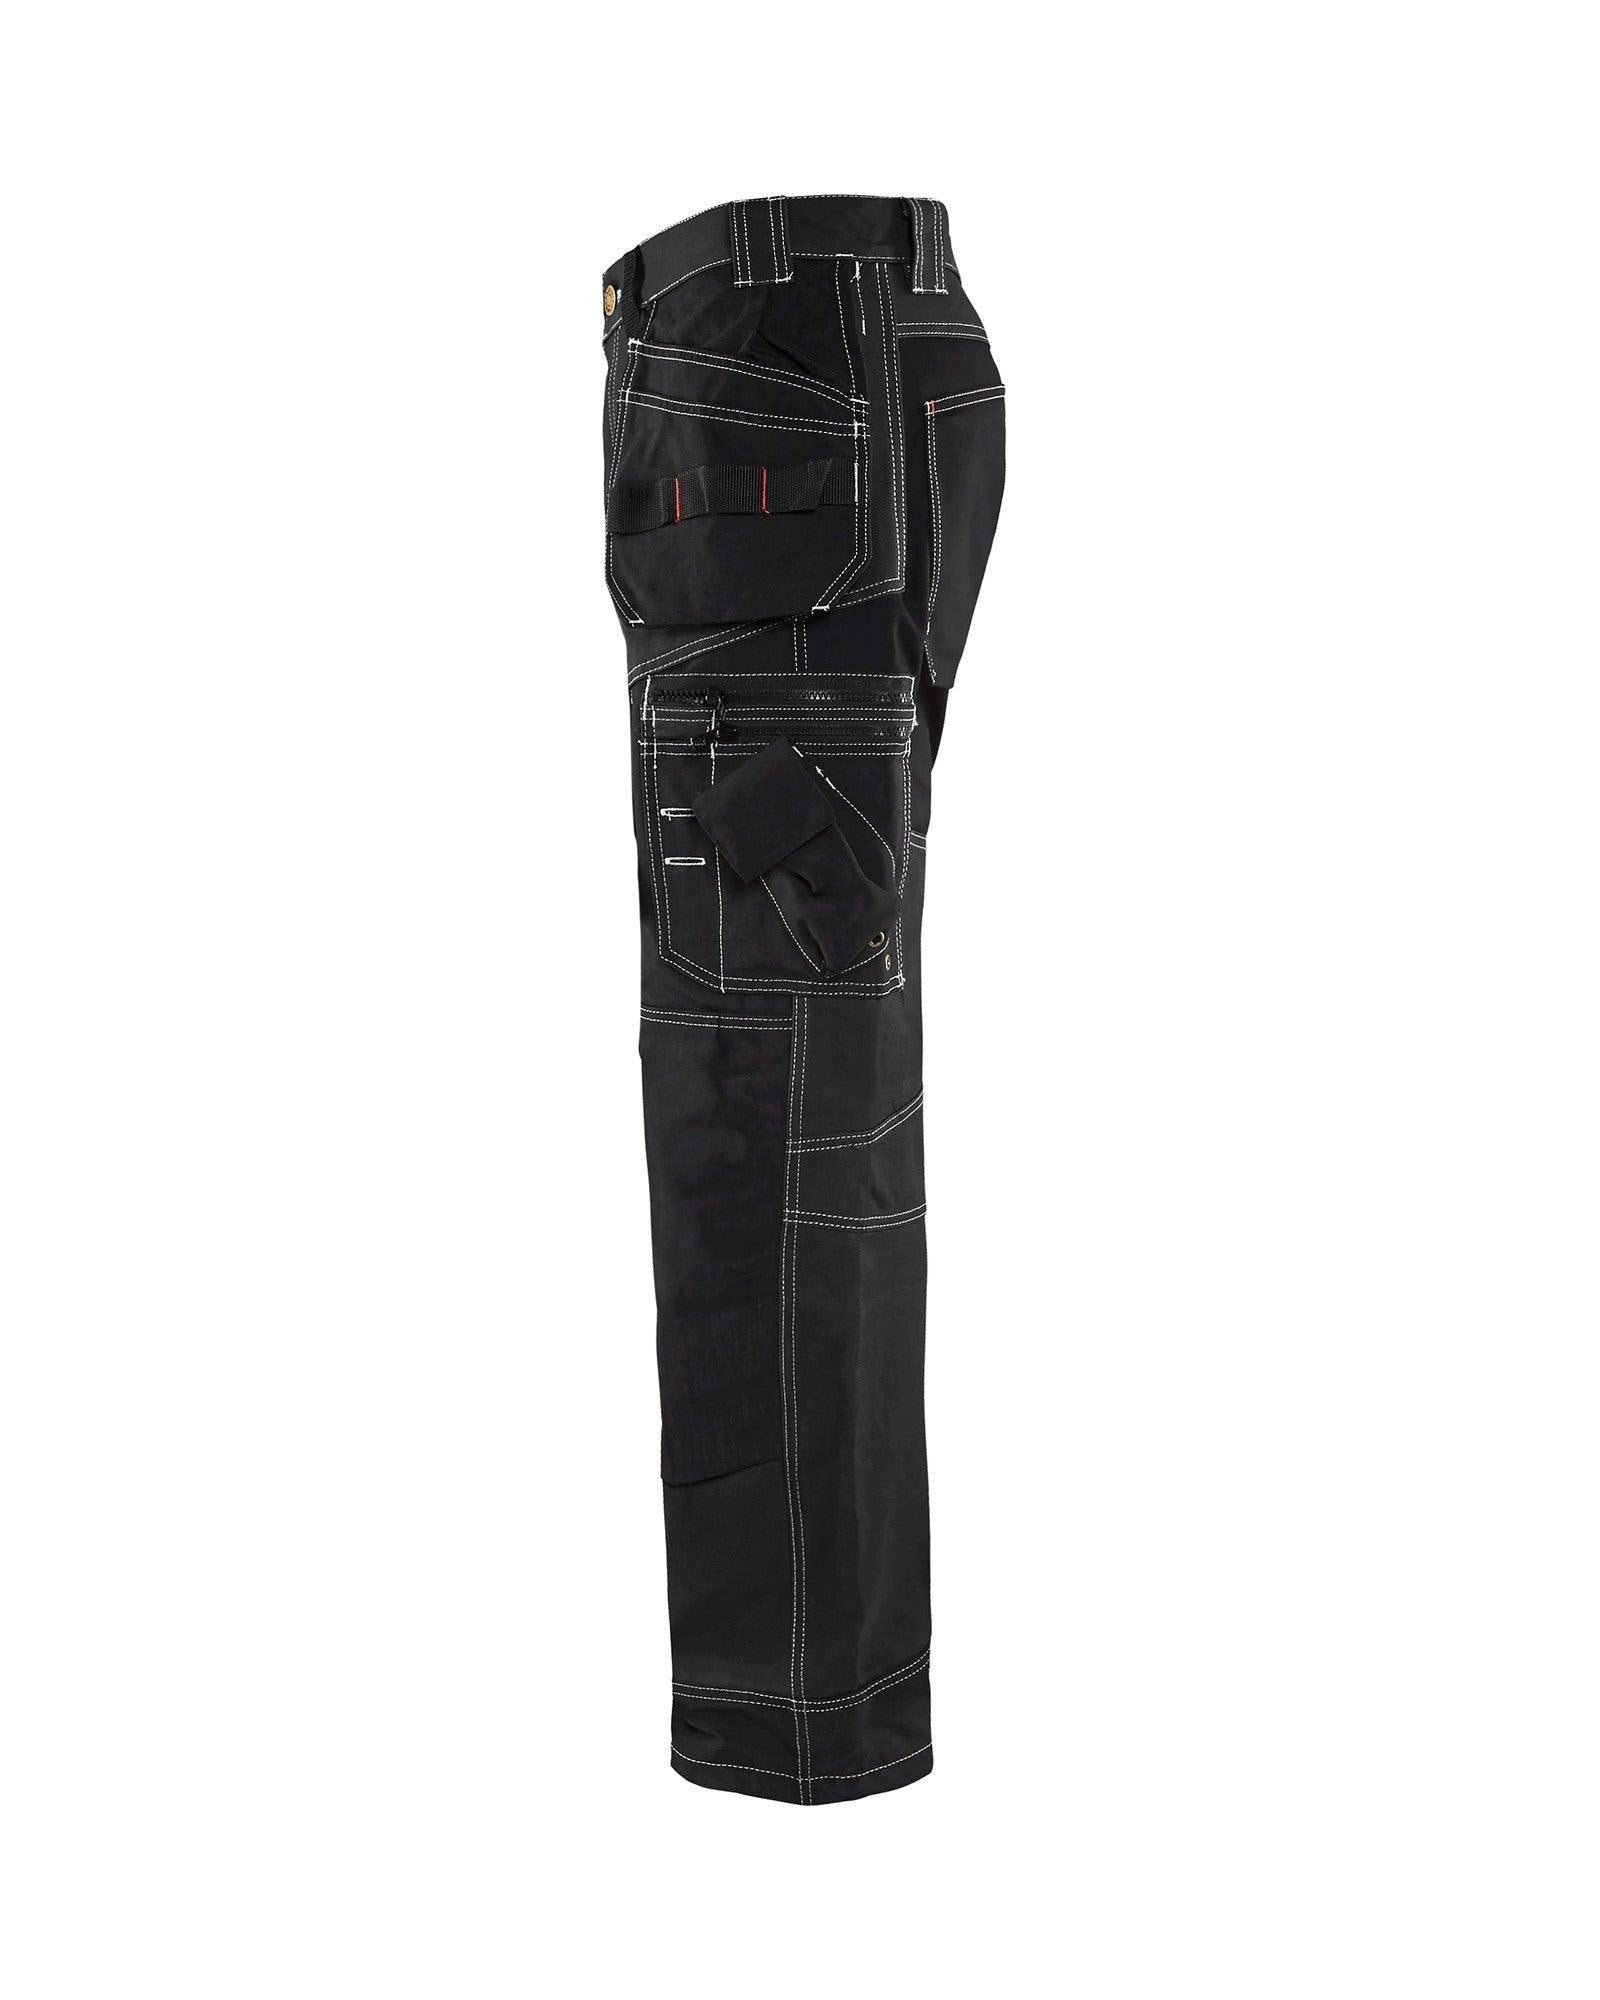 Blaklader 1600 Reinforced 11oz Cotton Work Pants - Black - Trusted Gear Company LLC